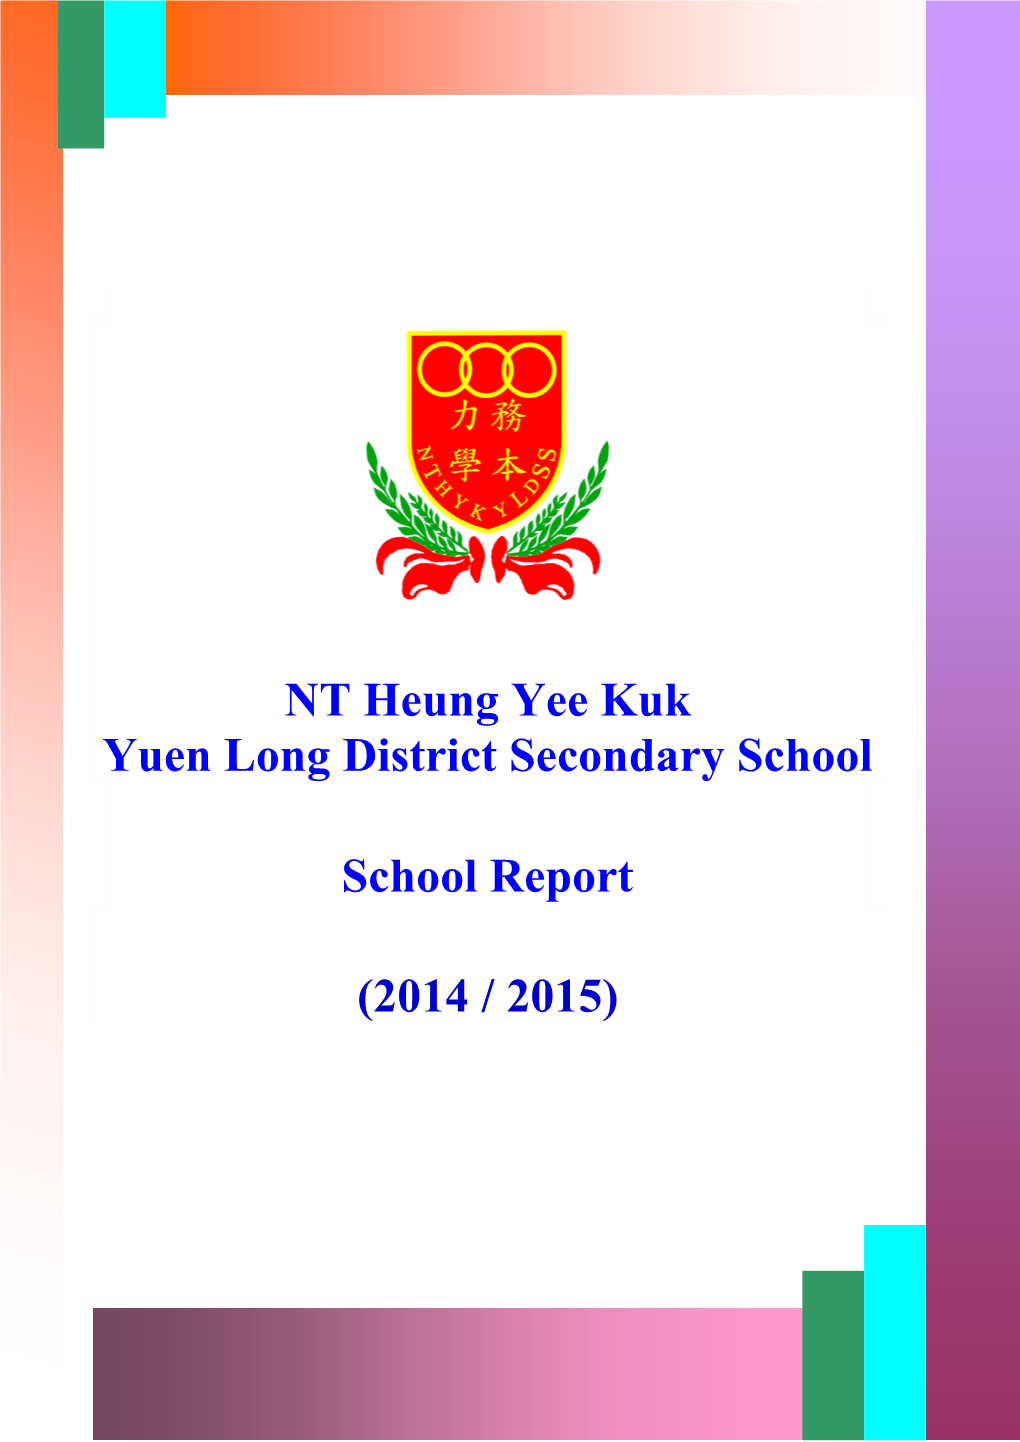 NT Heung Yee Kuk Yuen Long District Secondary School